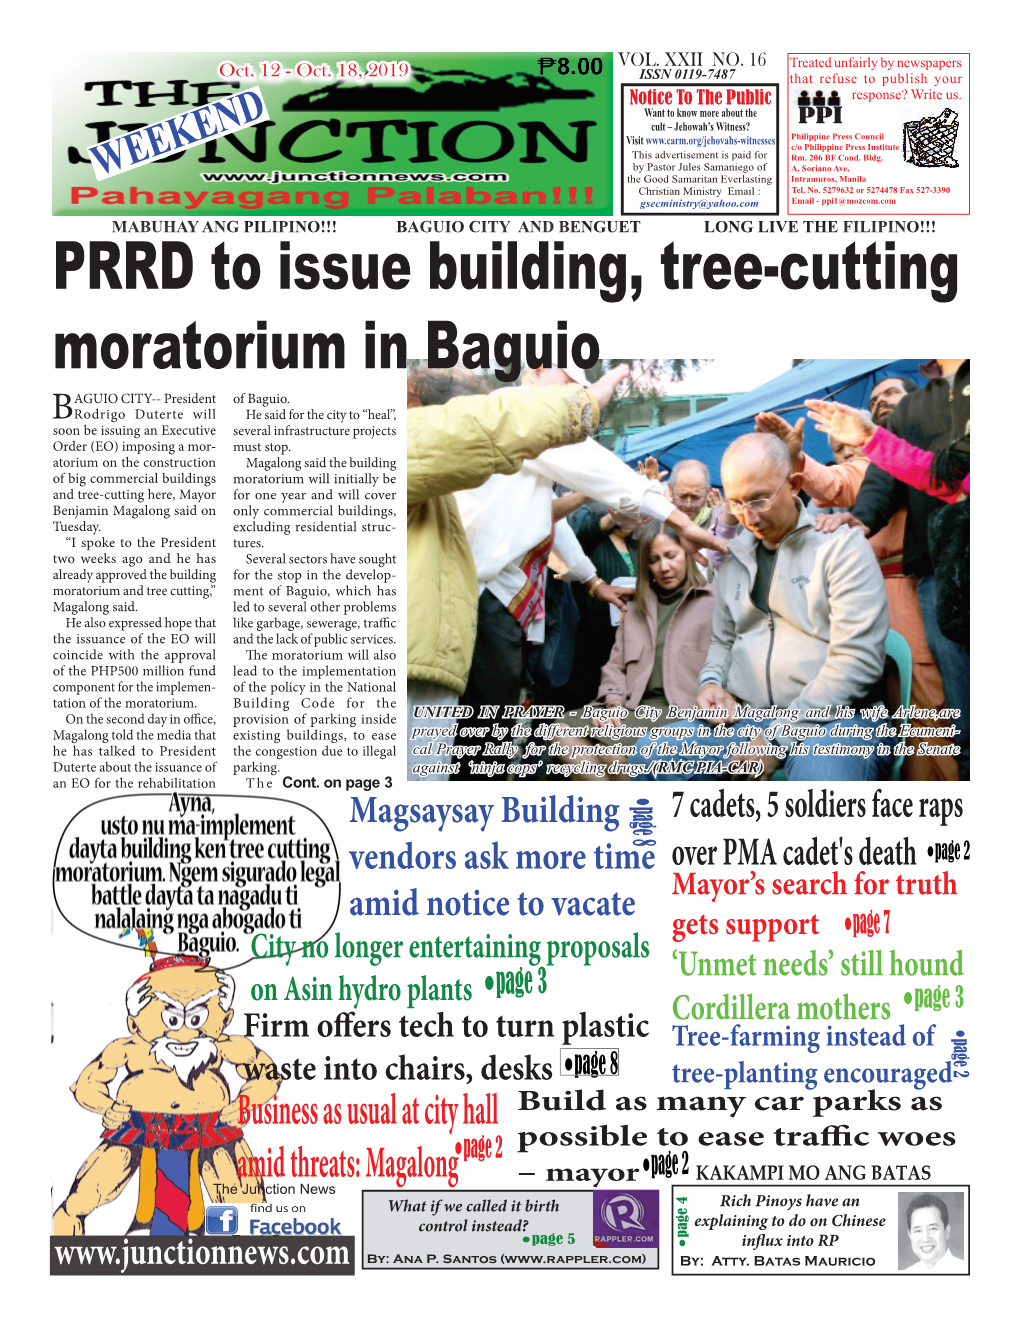 PRRD to Issue Building, Tree-Cutting Moratorium in Baguio AGUIO CITY-- President of Baguio